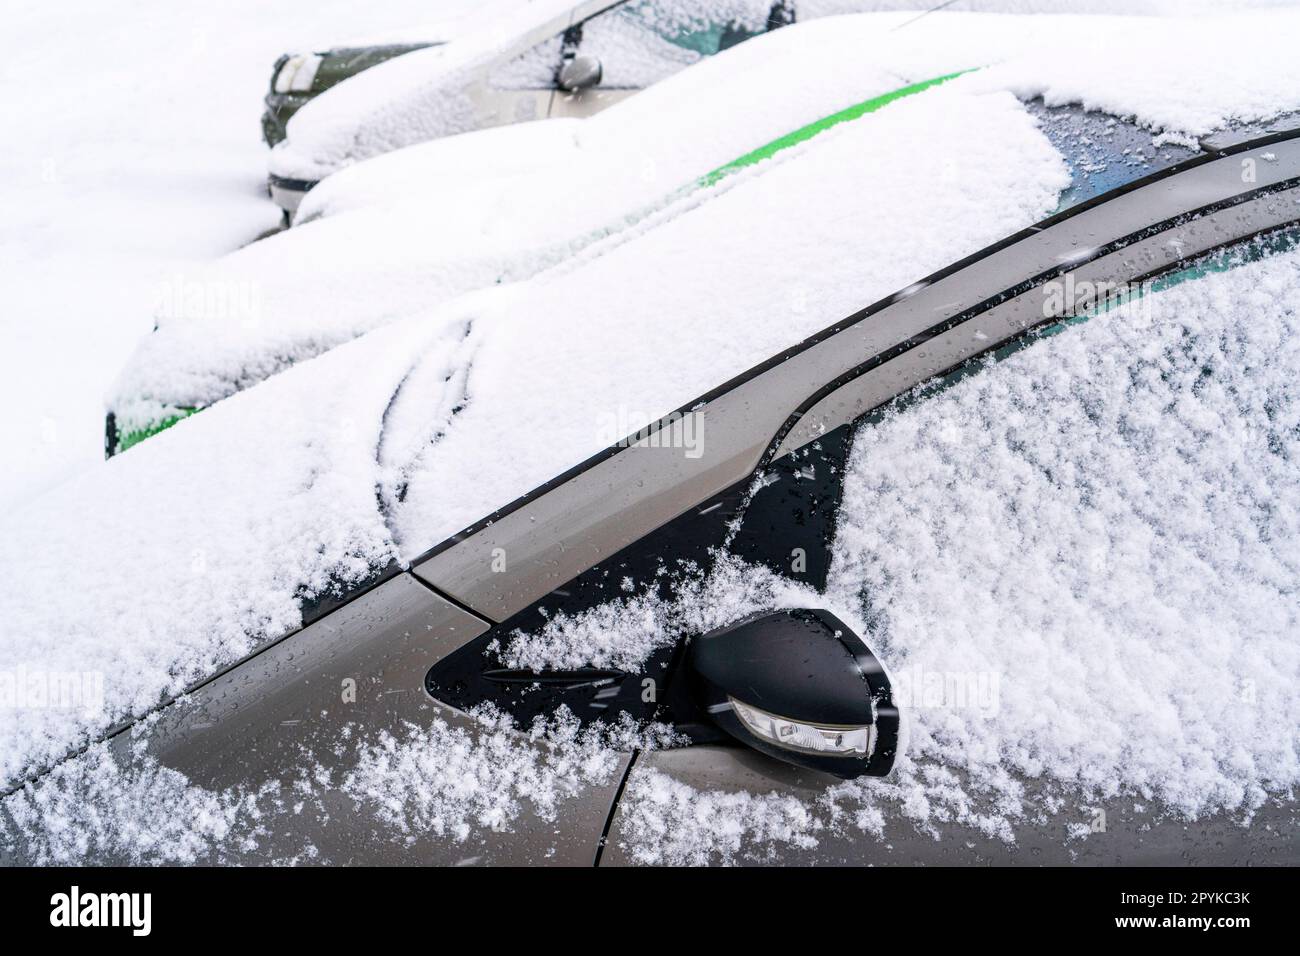 Finland Helsinki winter scene snow cover car Stock Photo - Alamy